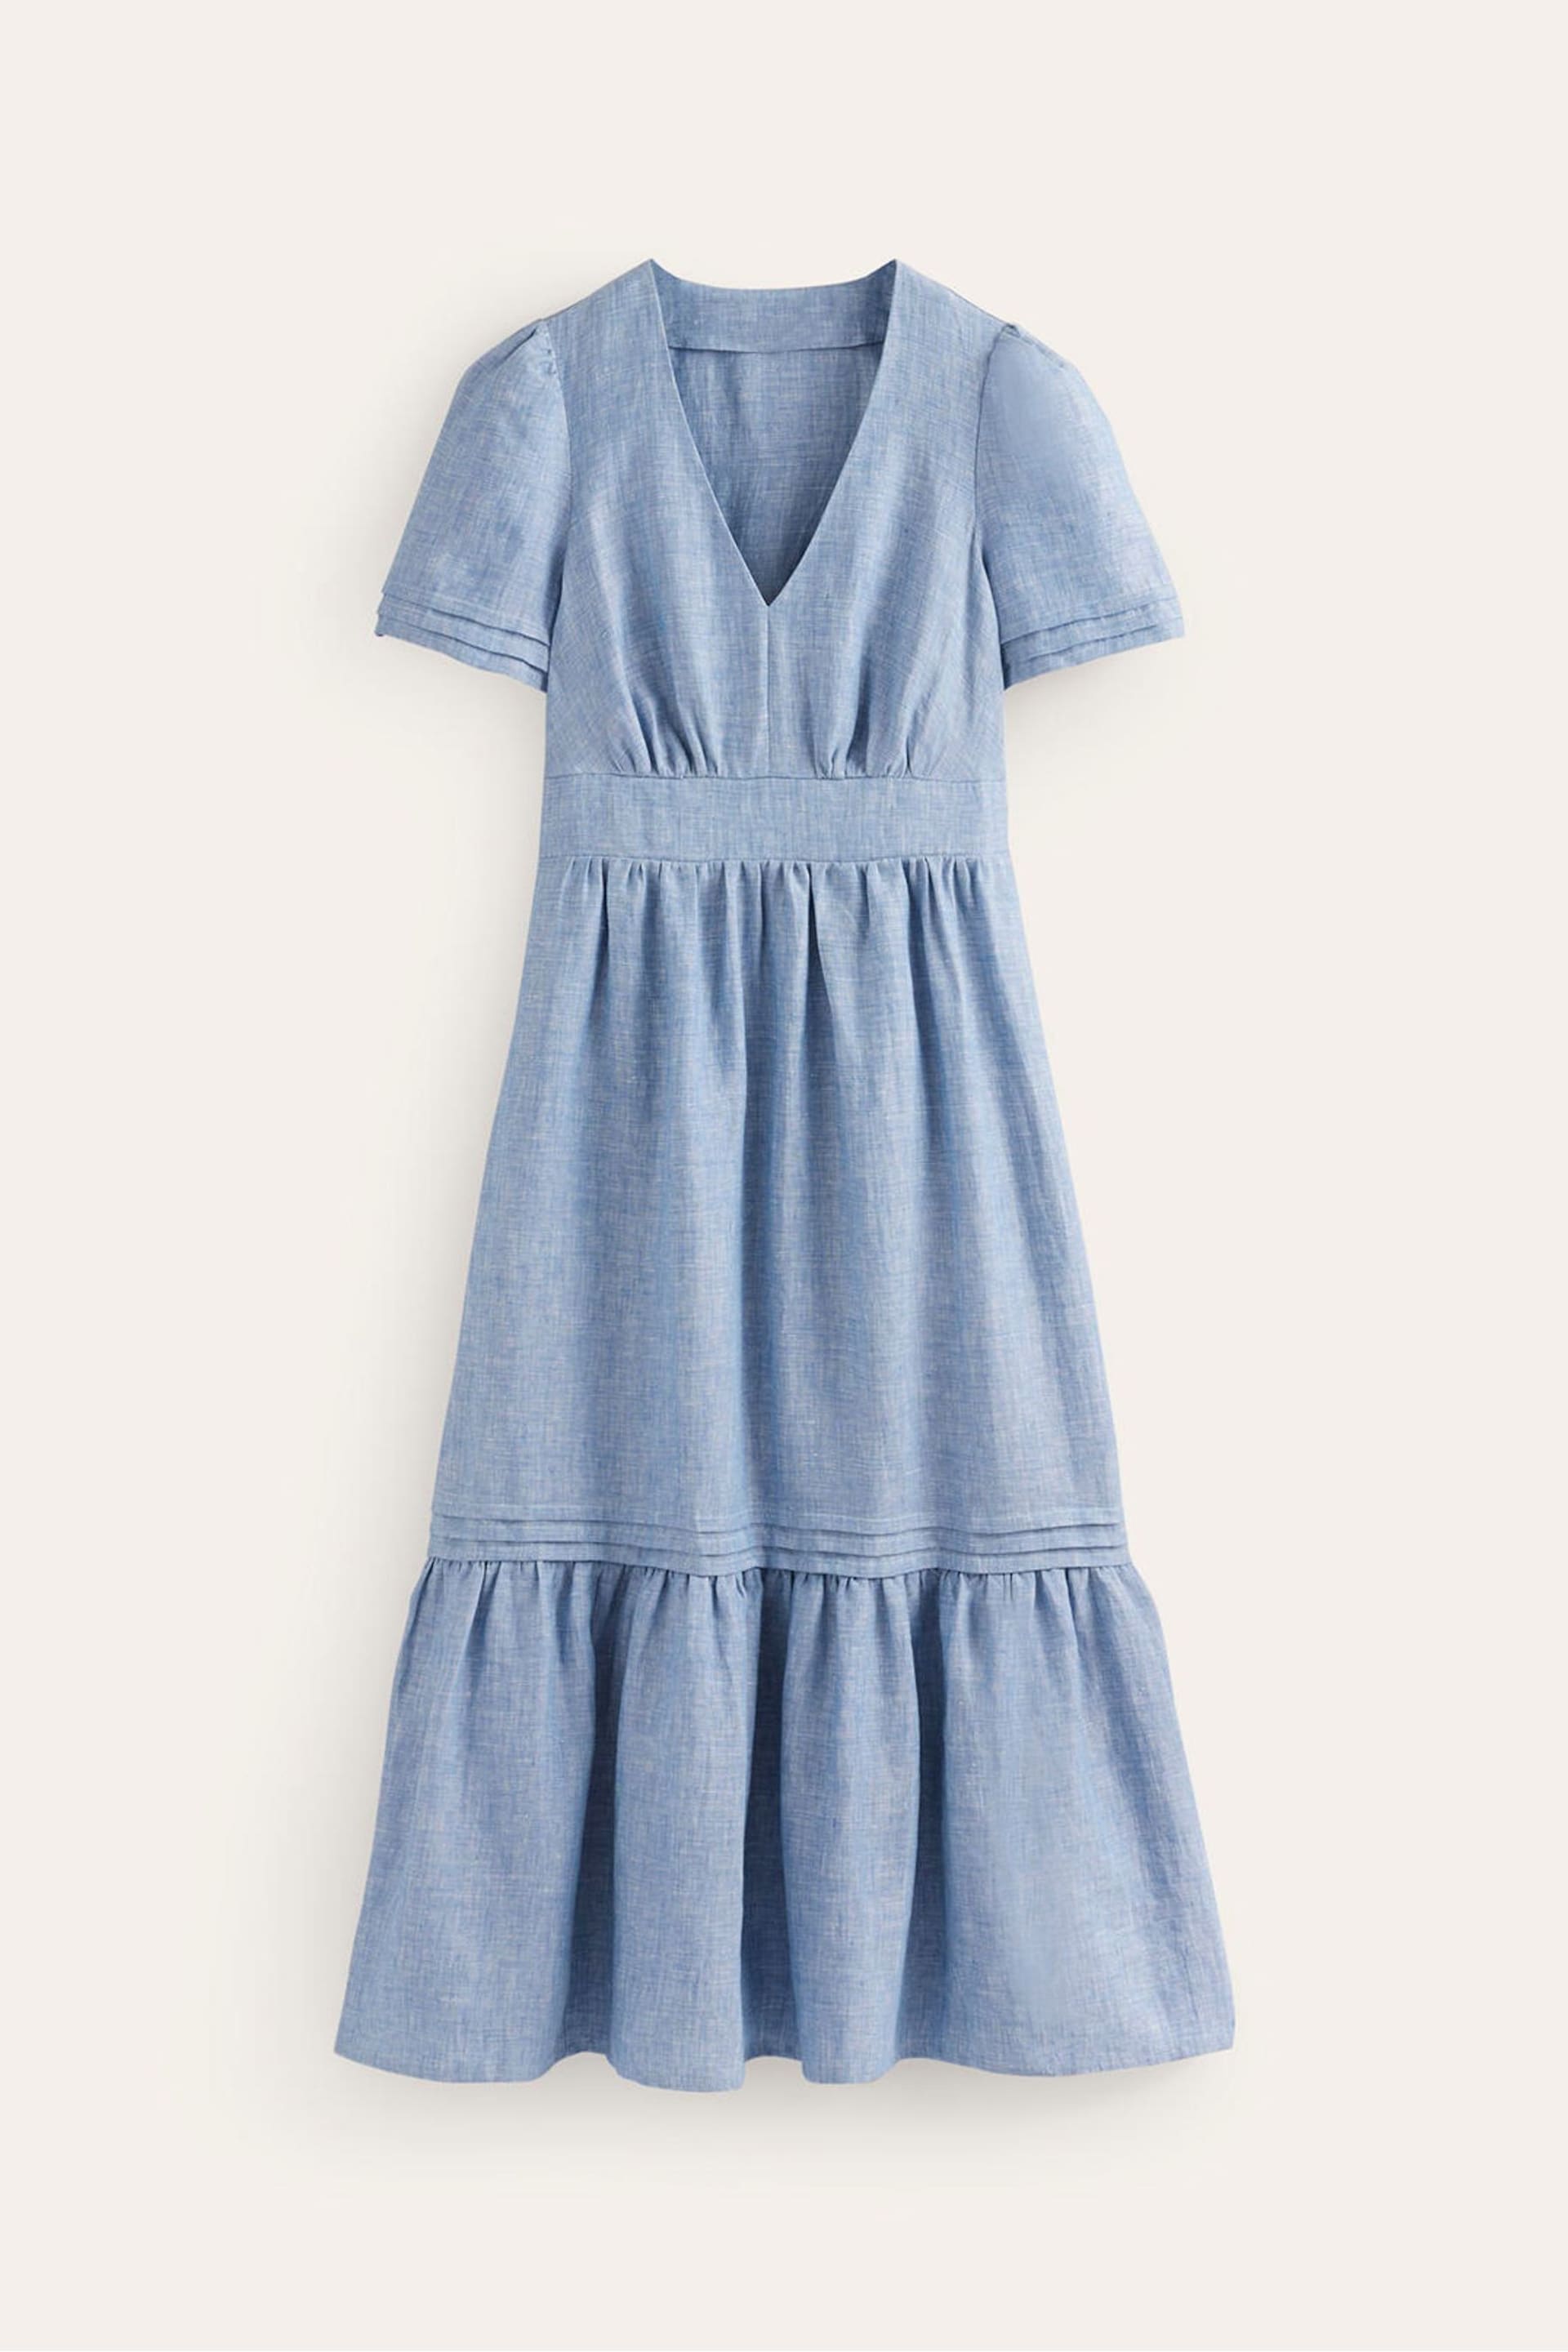 Boden Blue Eve Linen Midi Dress - Image 5 of 5